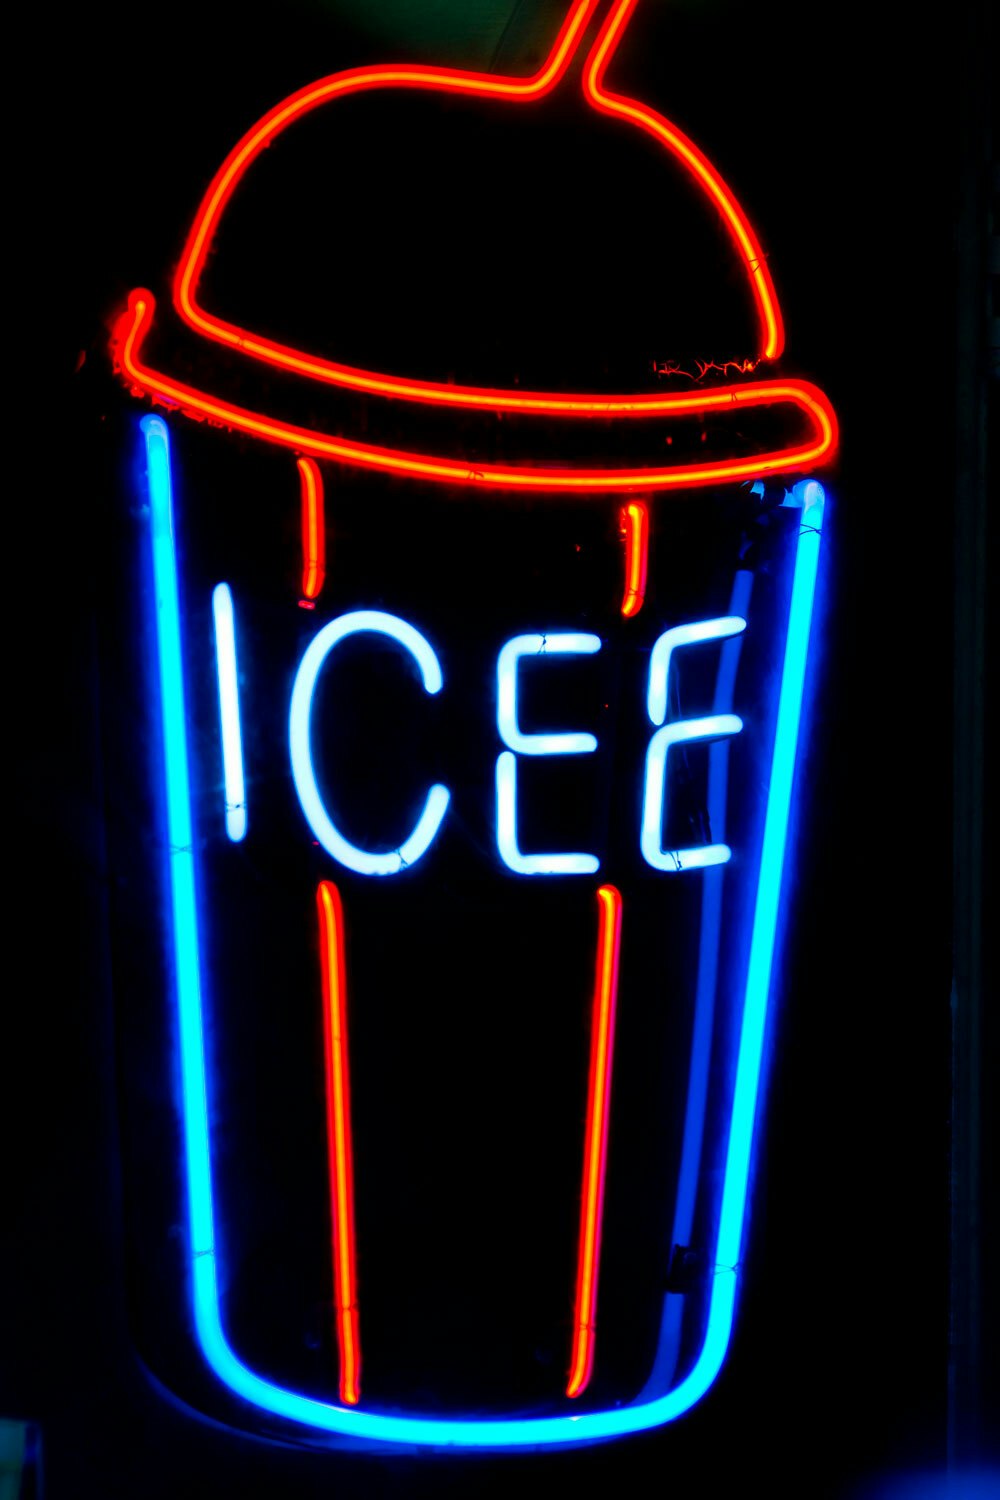 ICEE neon sign